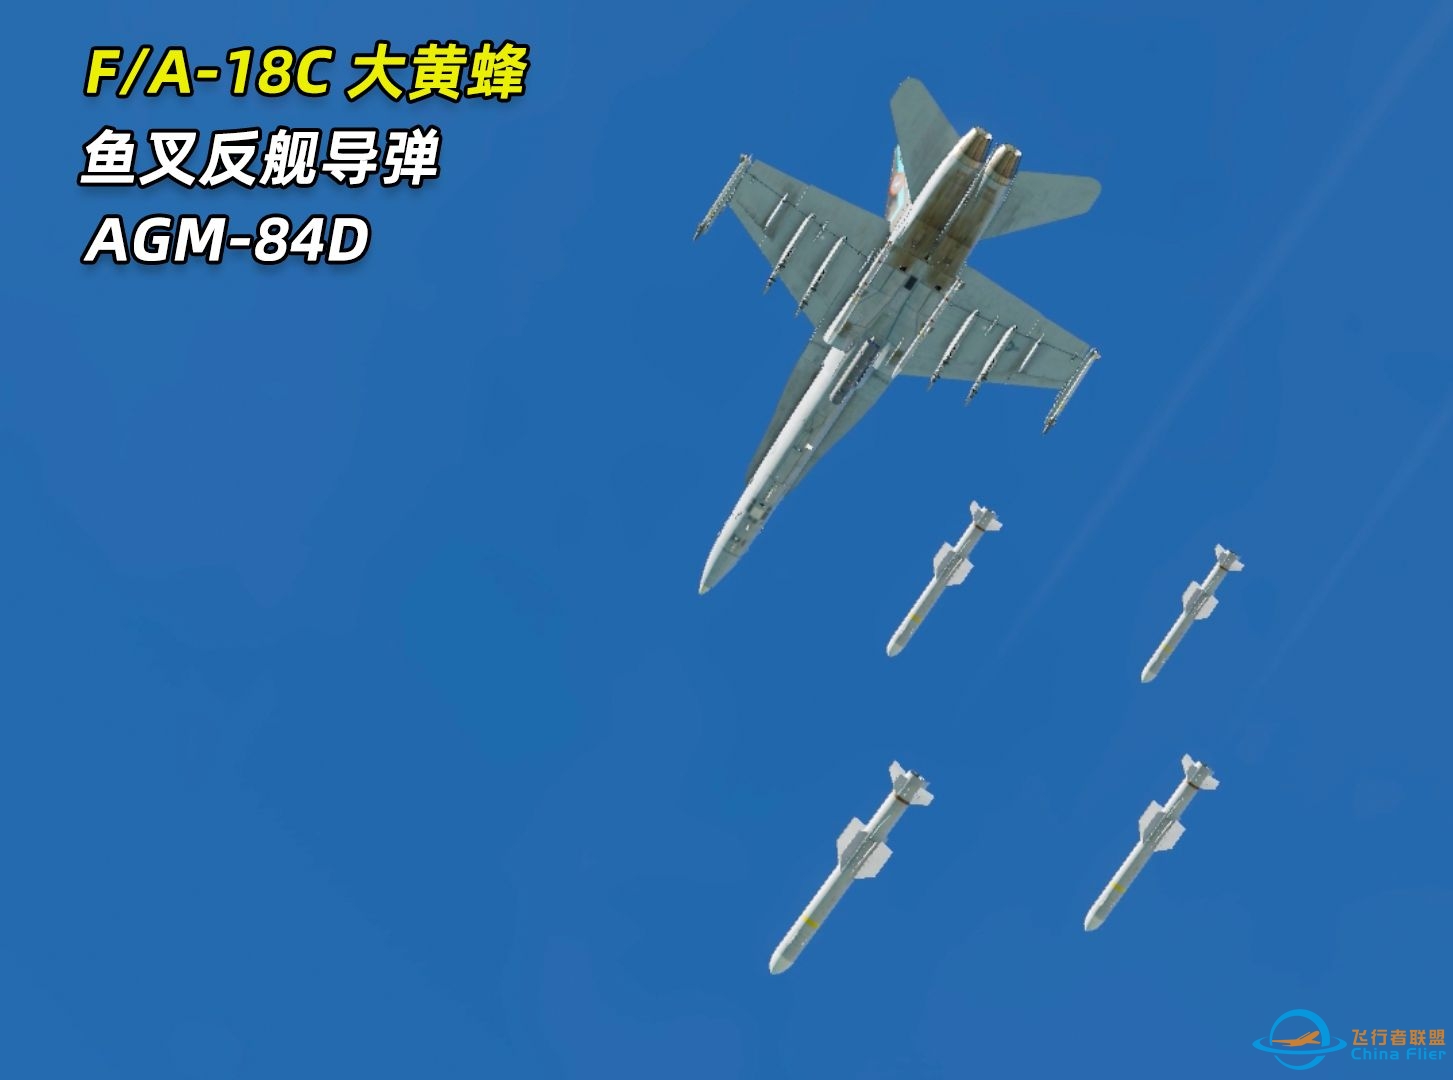 dcs world F/A18-C大黄蜂鱼叉反舰导弹 AGM84D（BOL模式）-3874 